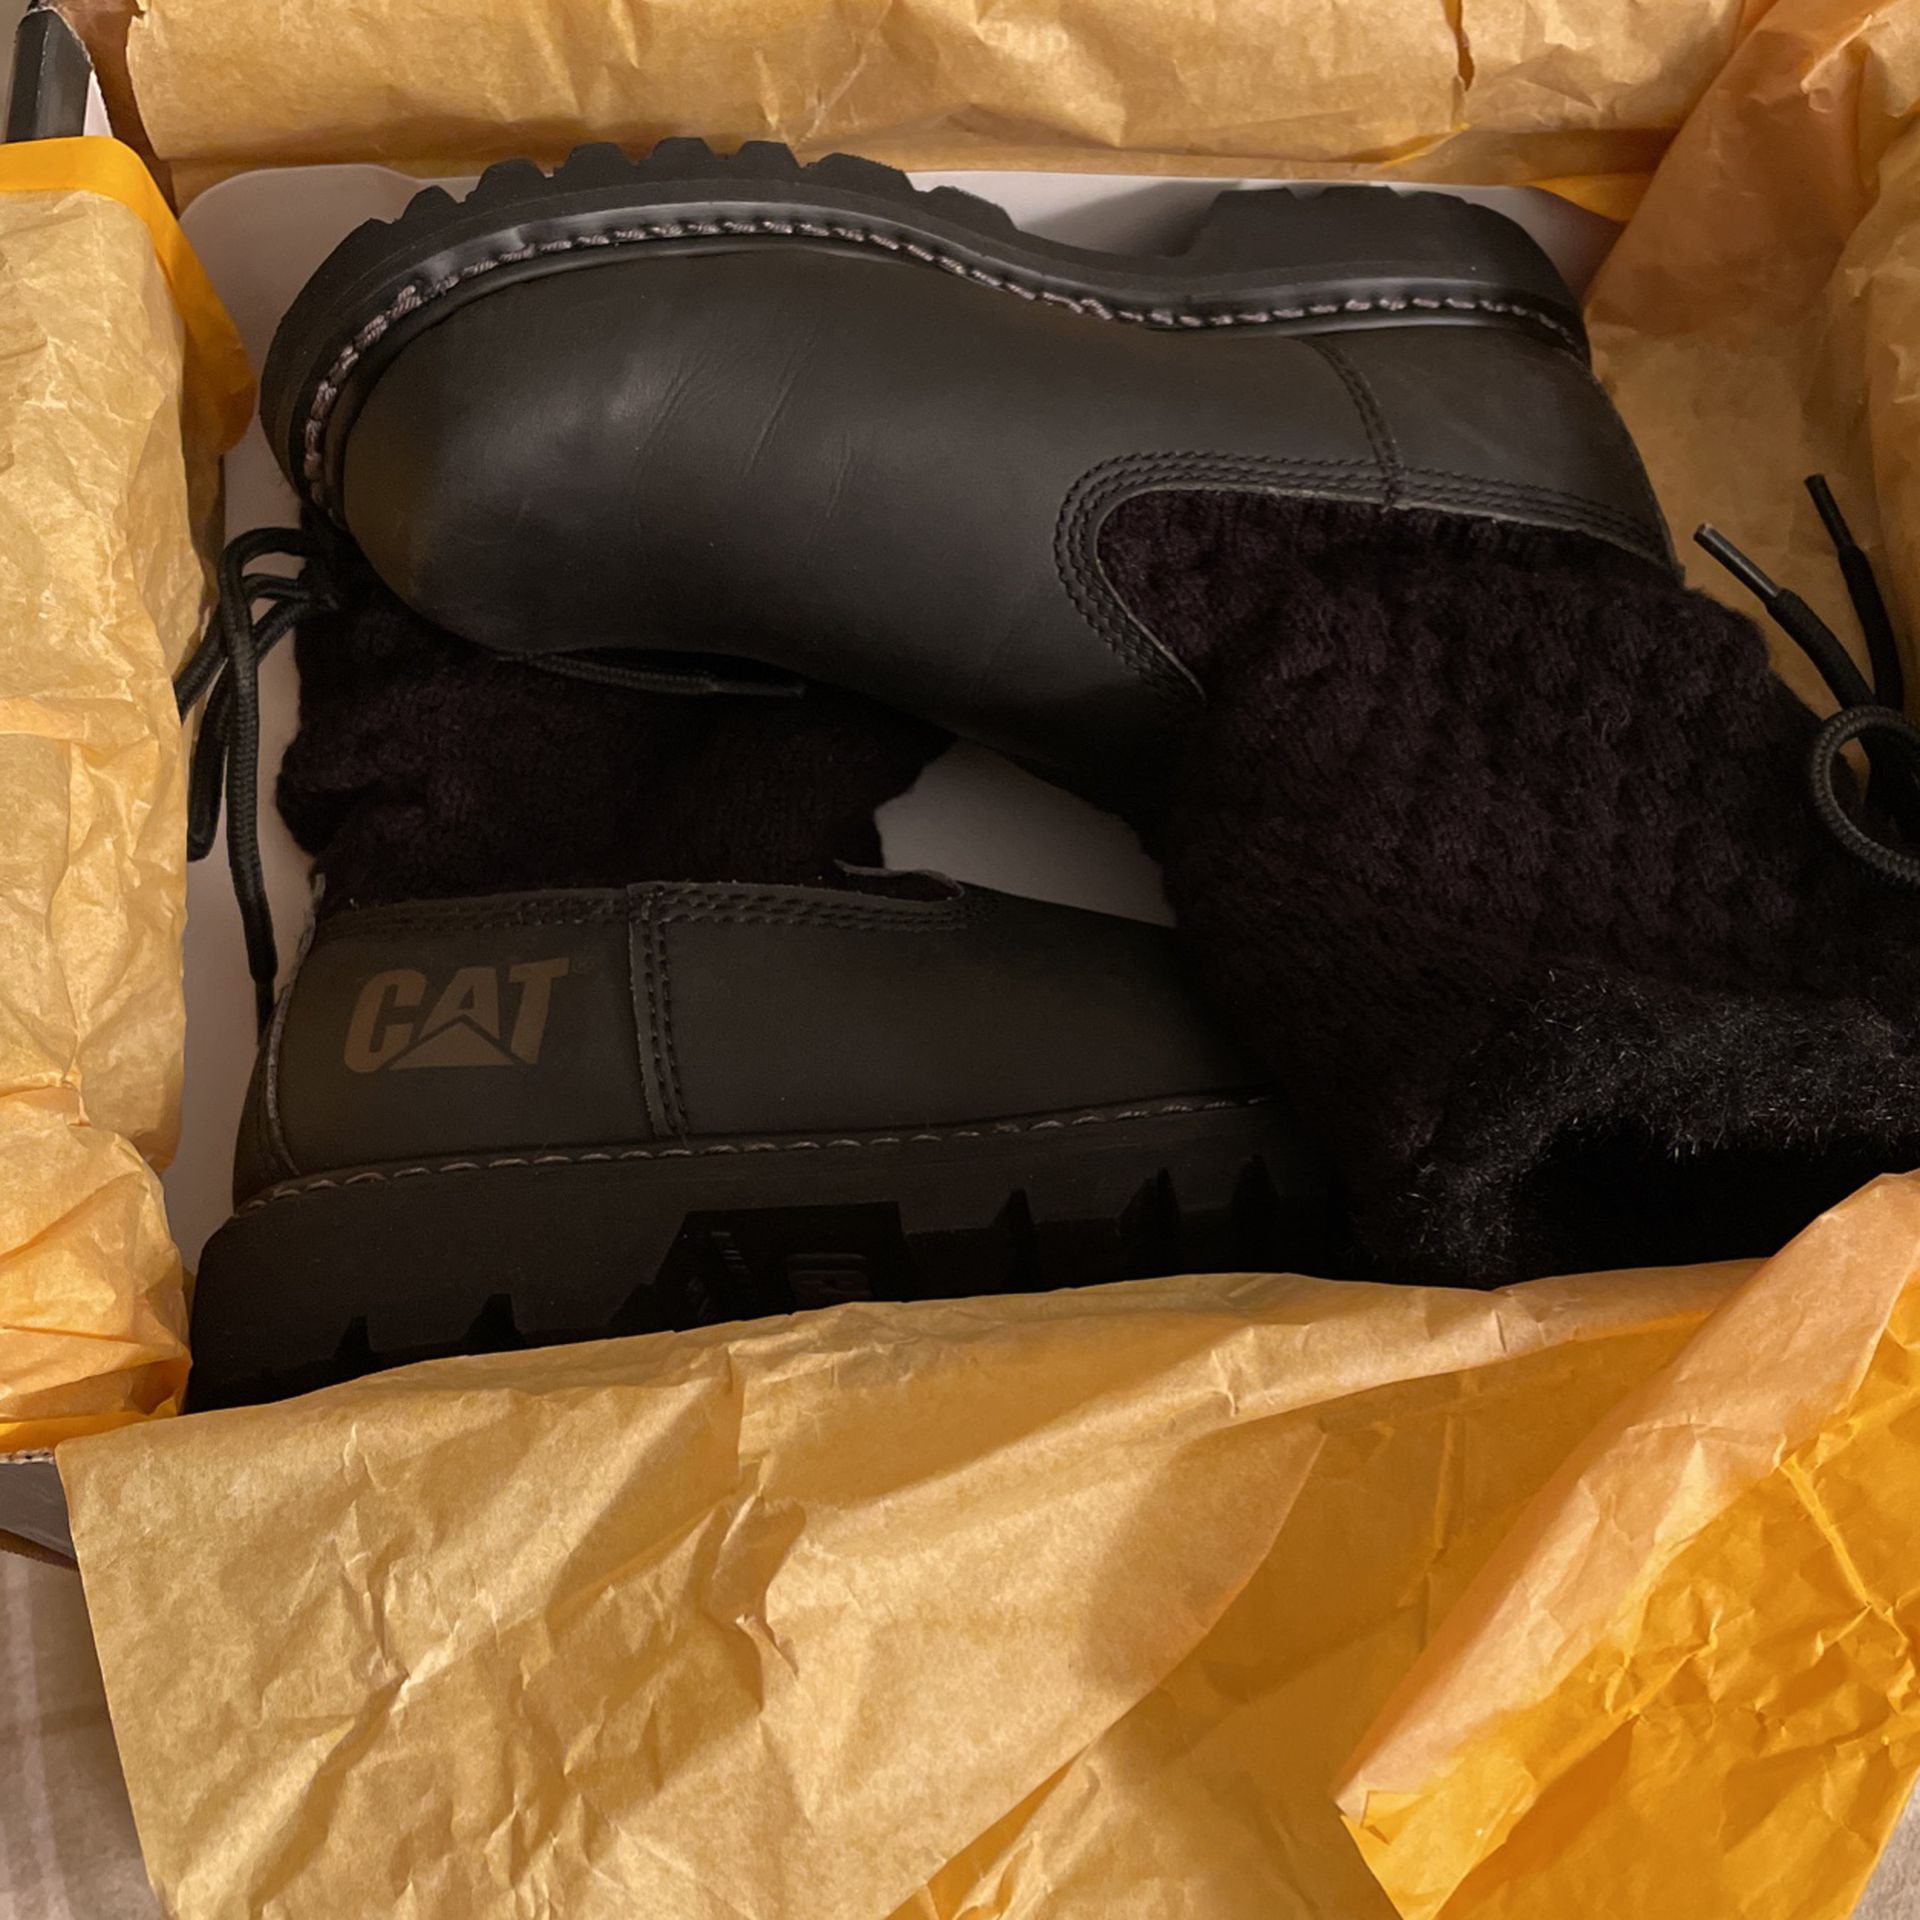 Brand New Womens Cat Boots Sz 6. Still In The Box.